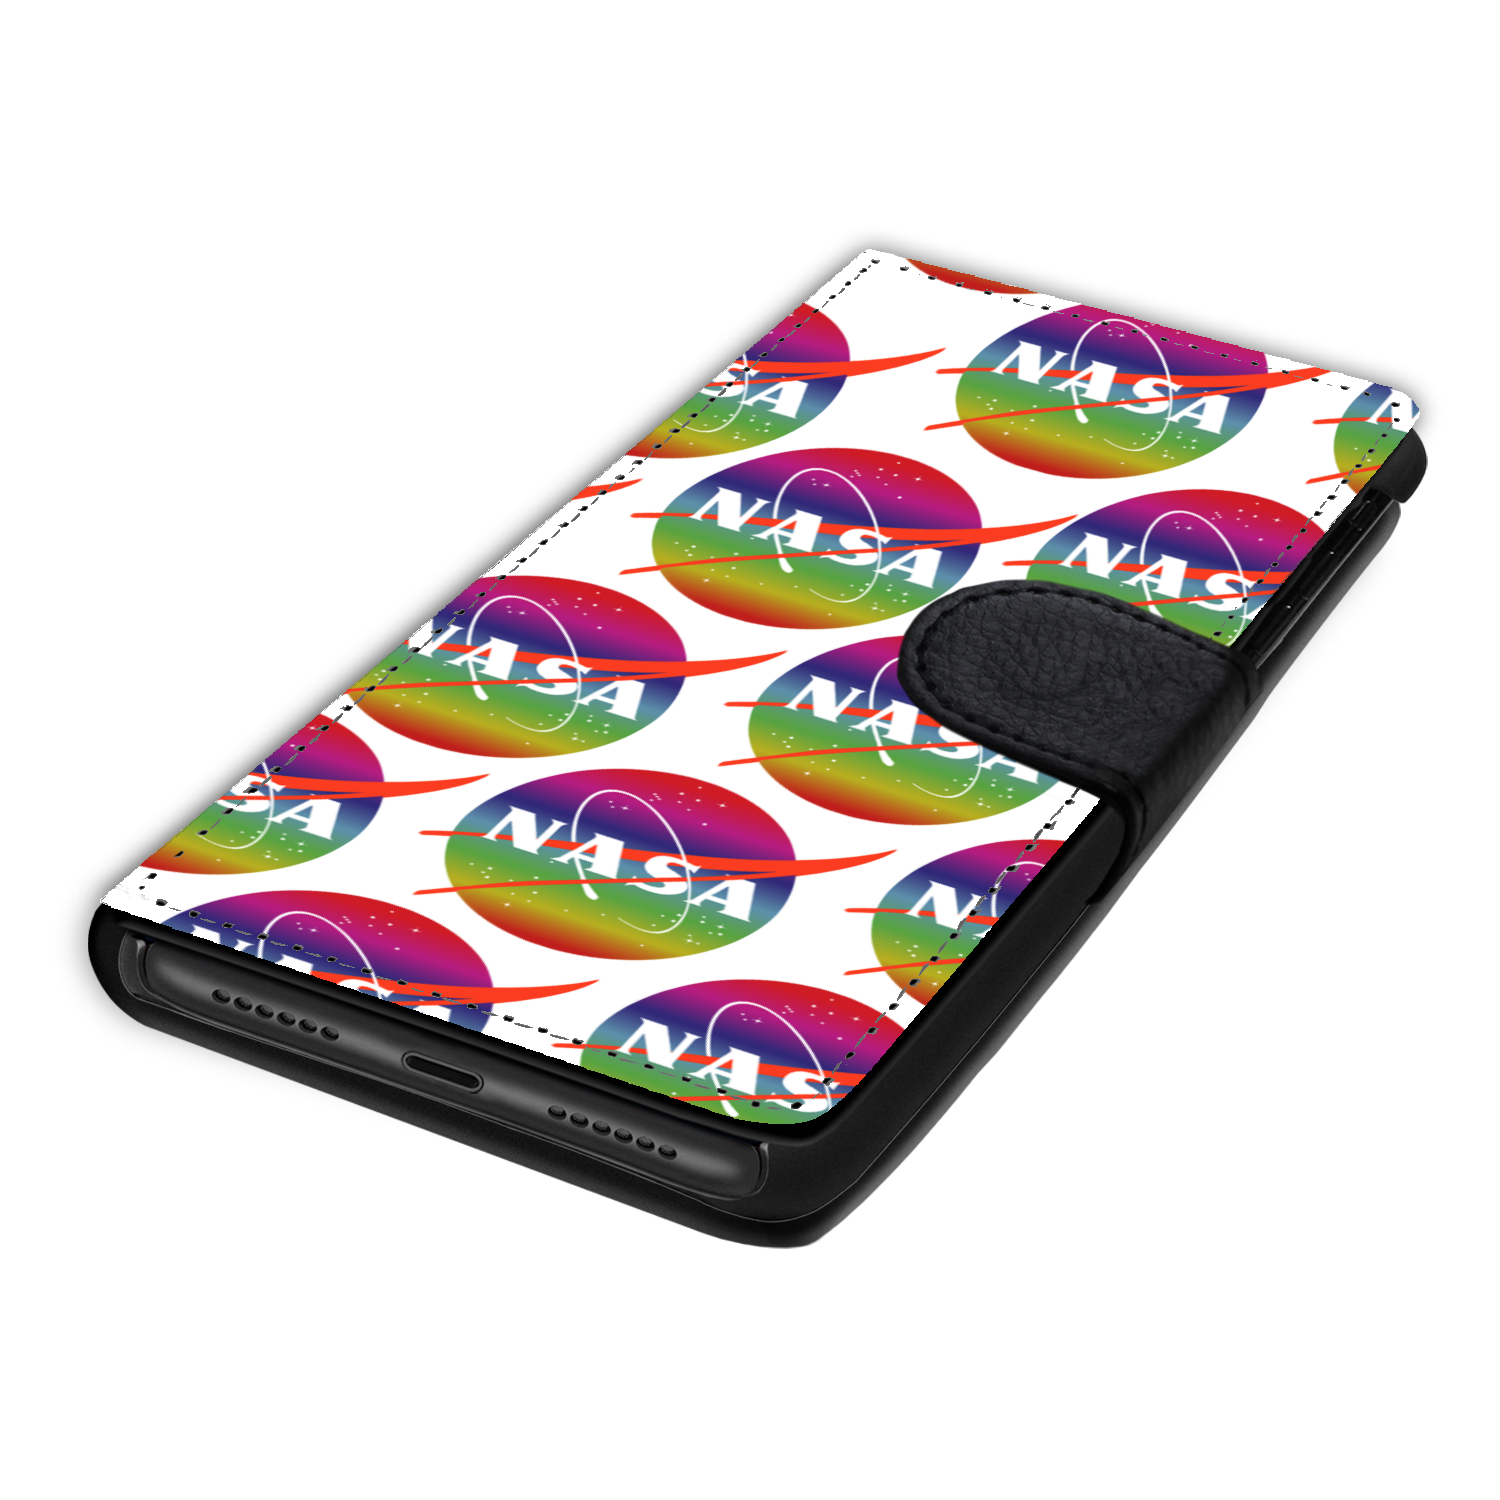 NASA Rainbow Wallet Phone Case